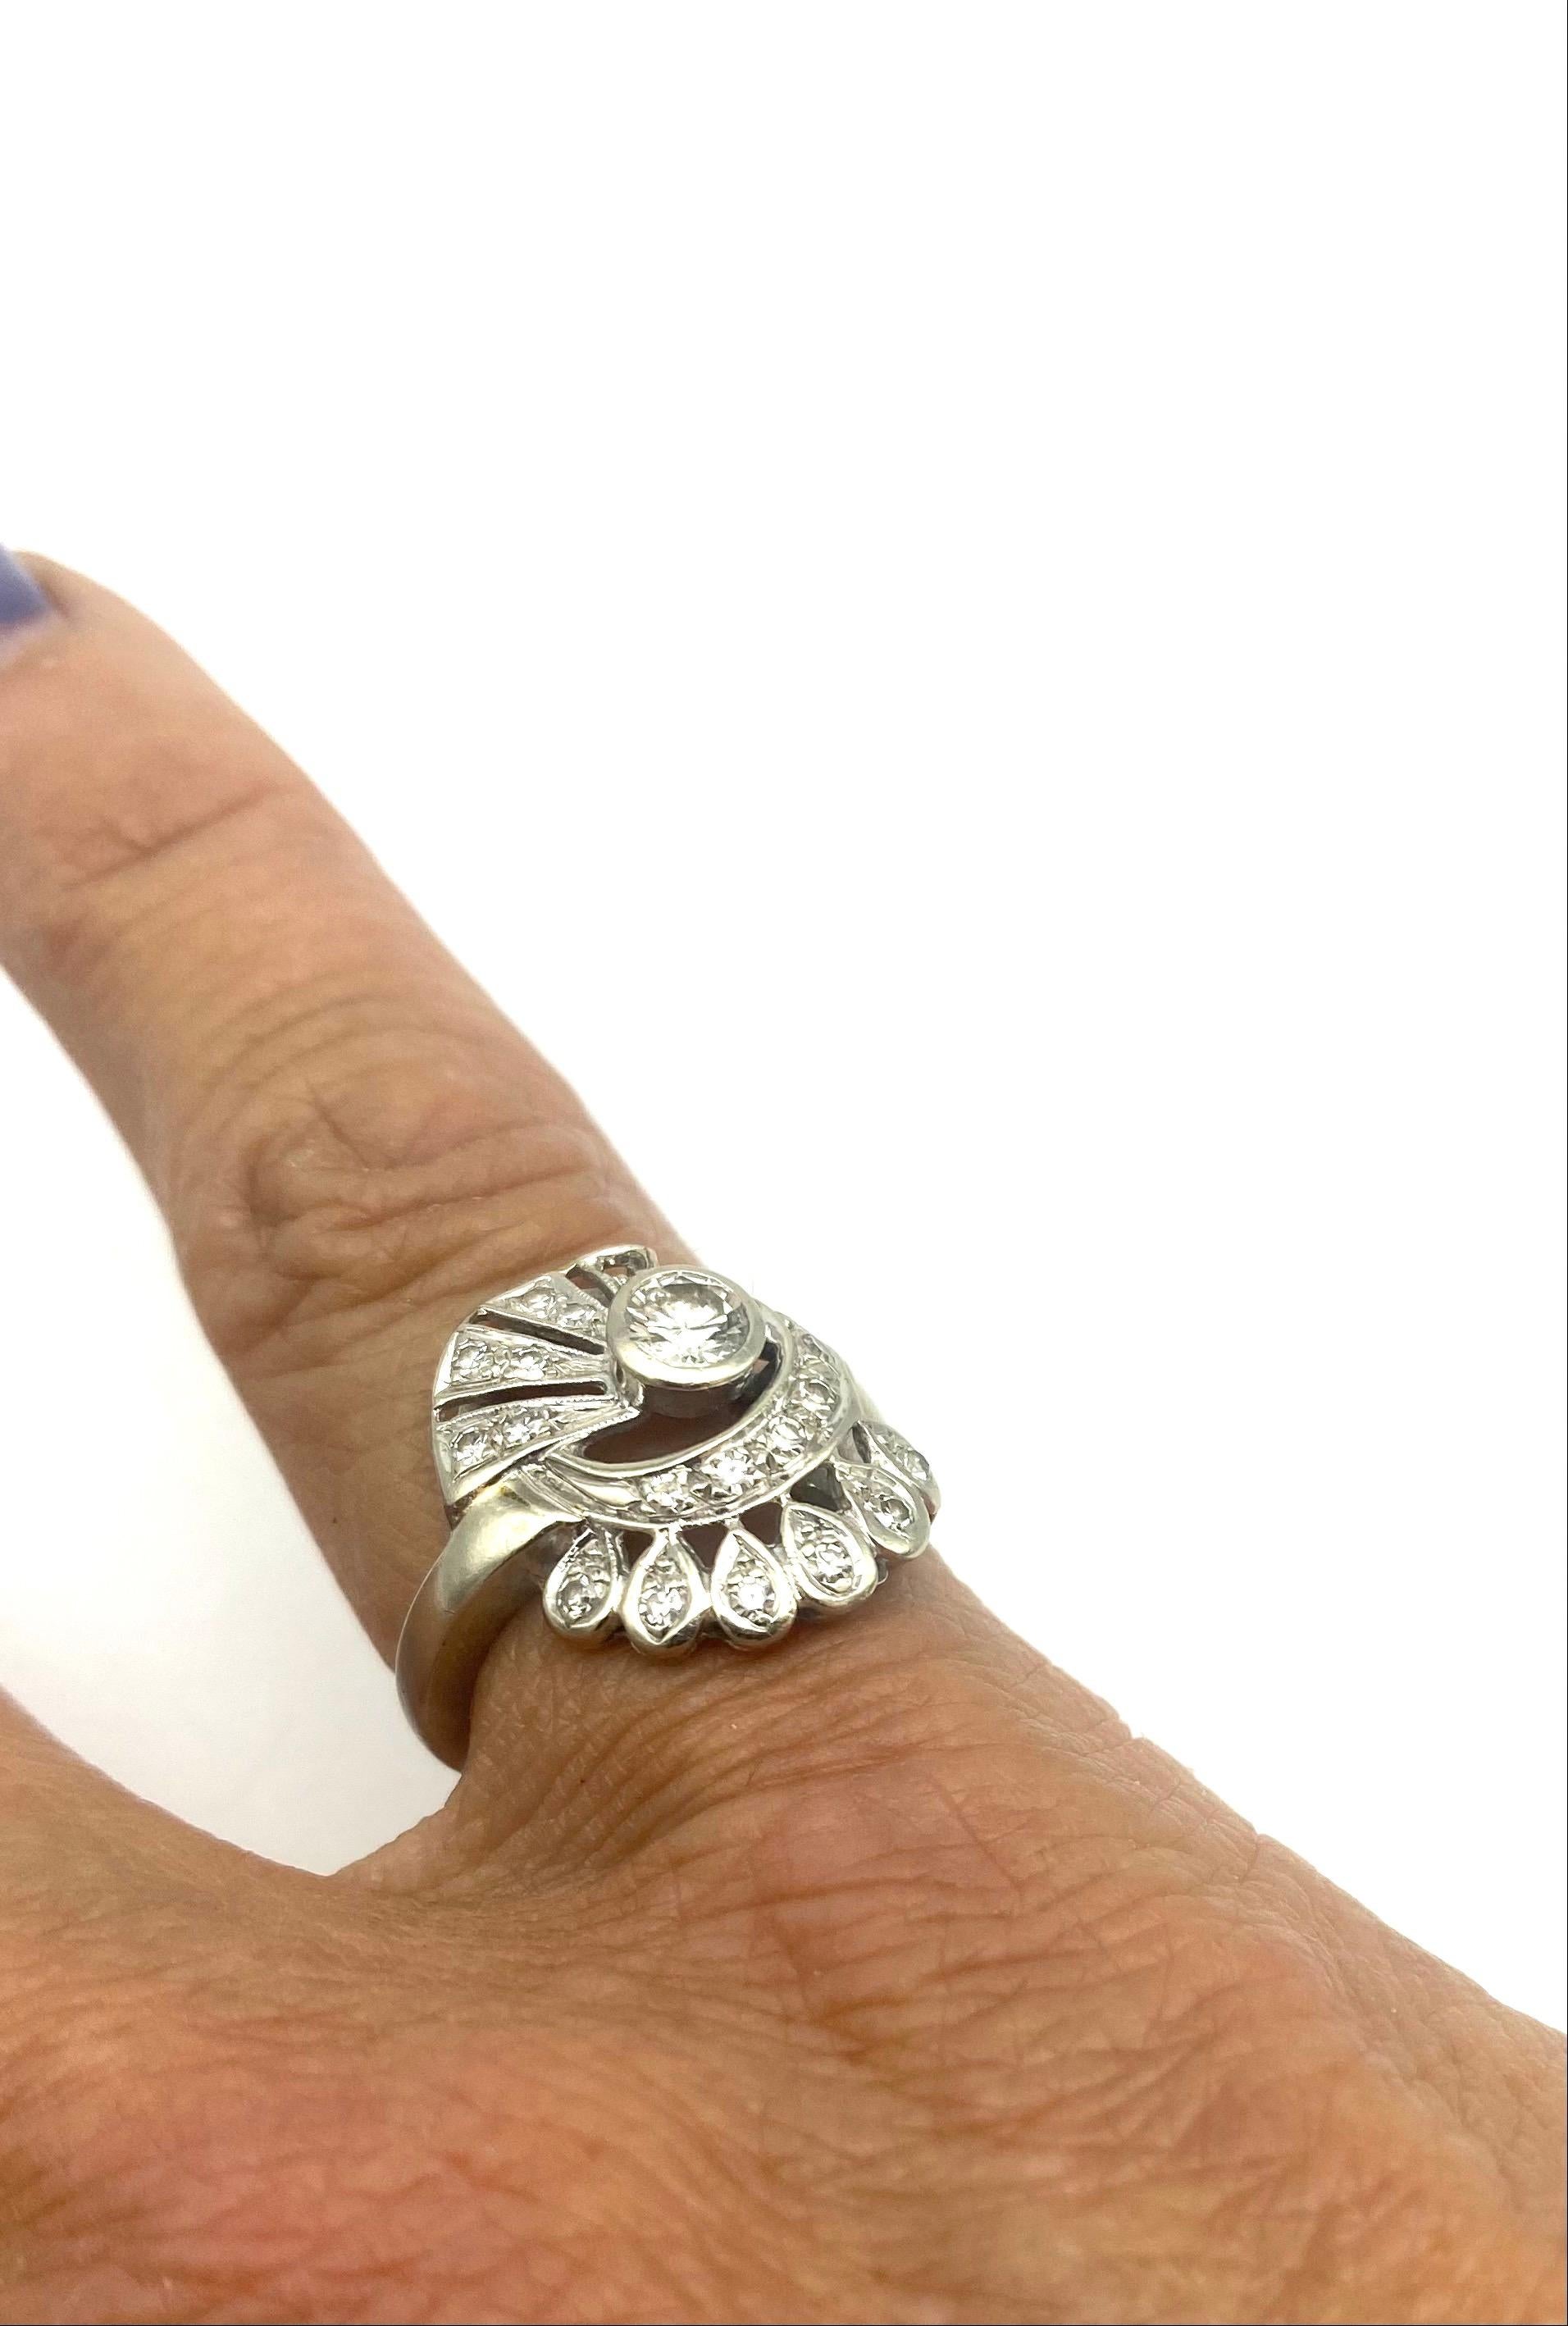 Women's or Men's Art Deco .50 CTW European Diamond Ring, 14 Karat White Gold